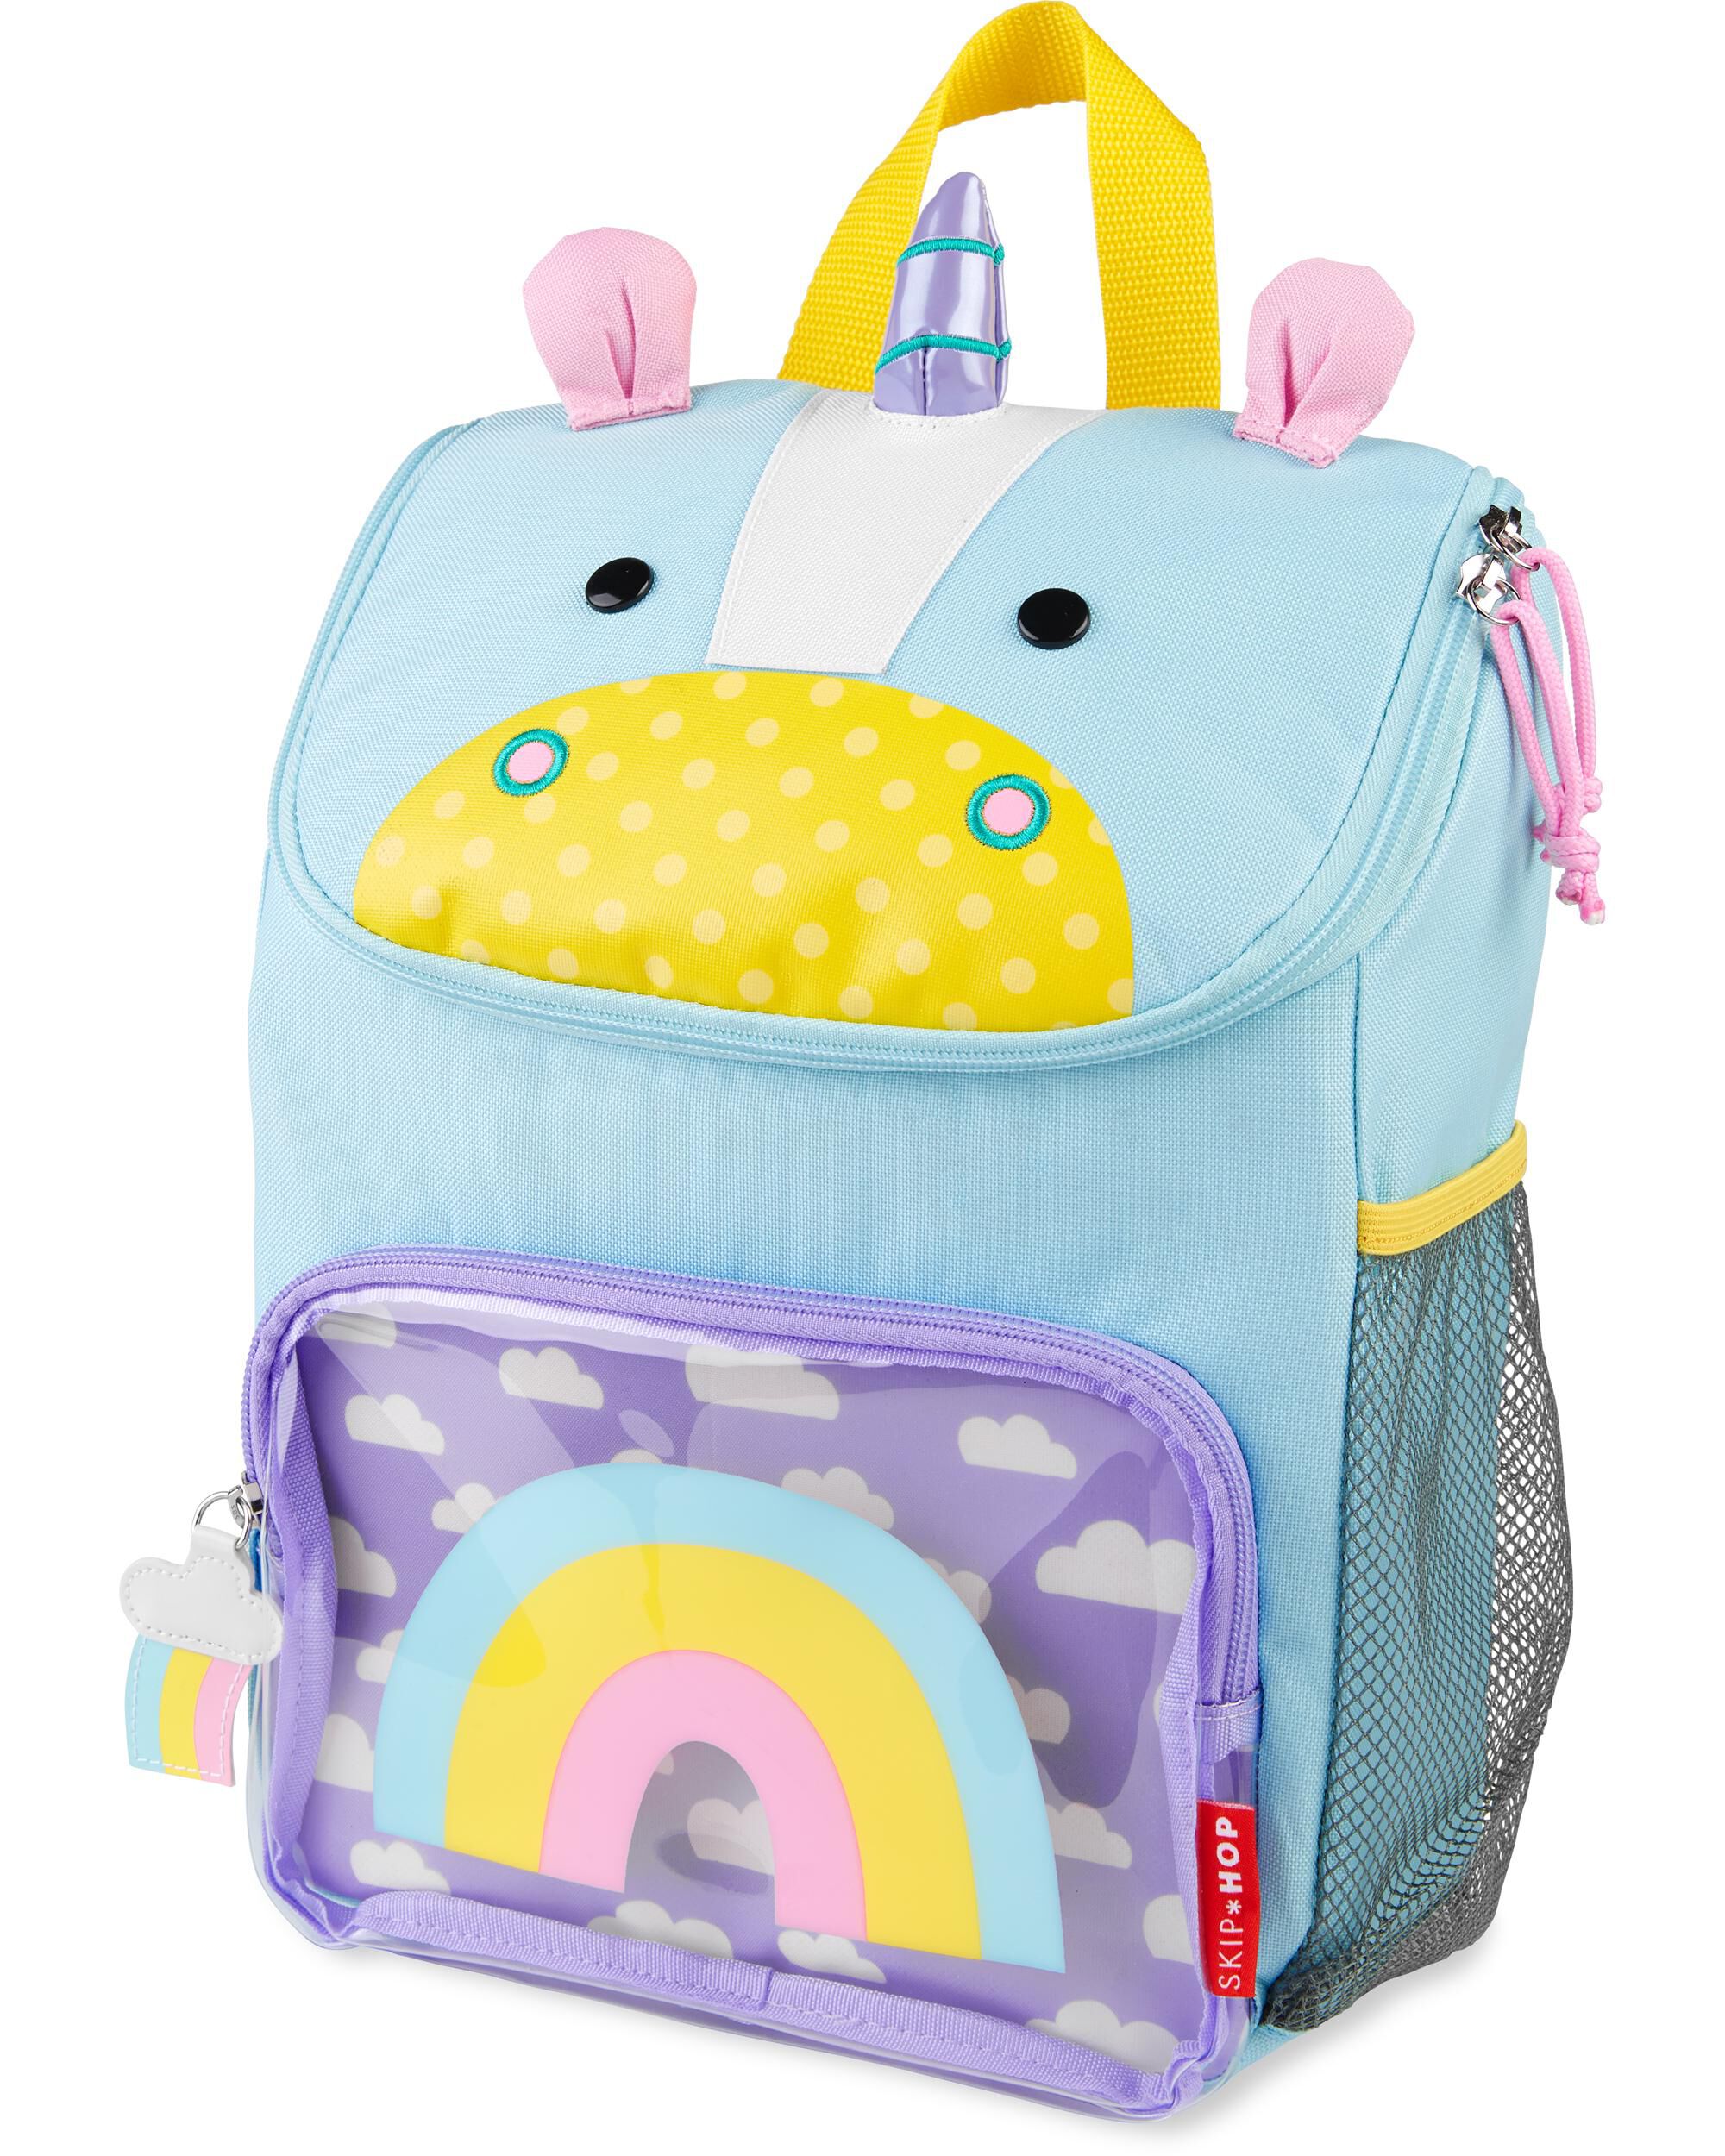 Personalised Any Name Kids Backpack Unicorn Design Childrens School Bag 45 